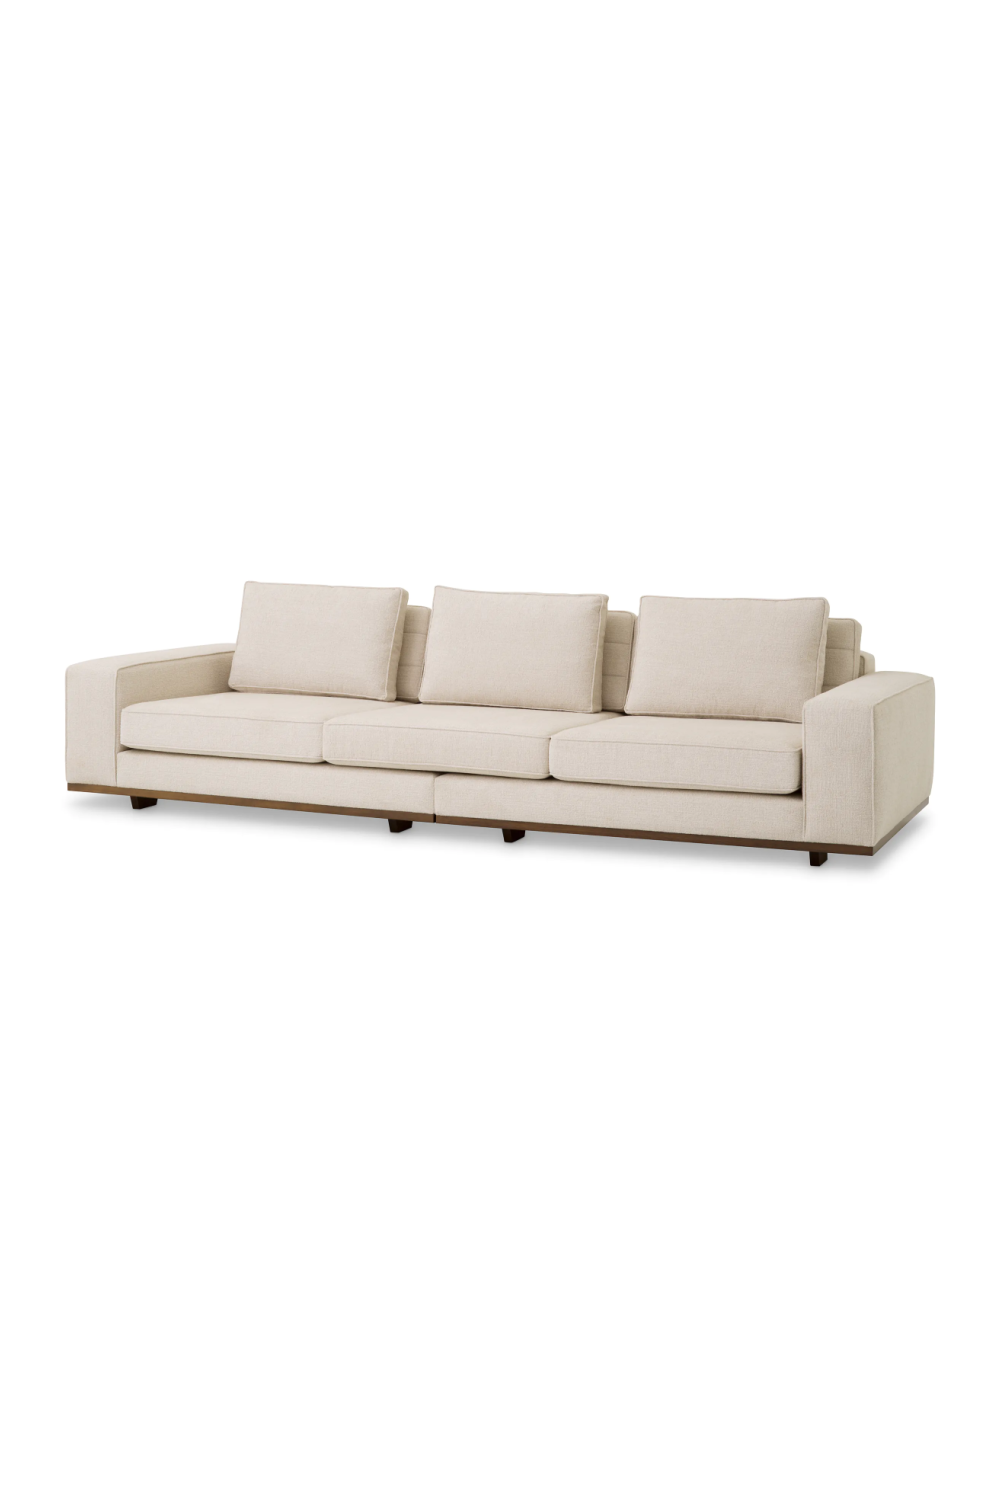 Beige Modern Sofa | Eichholtz Aurora | Oroa.com